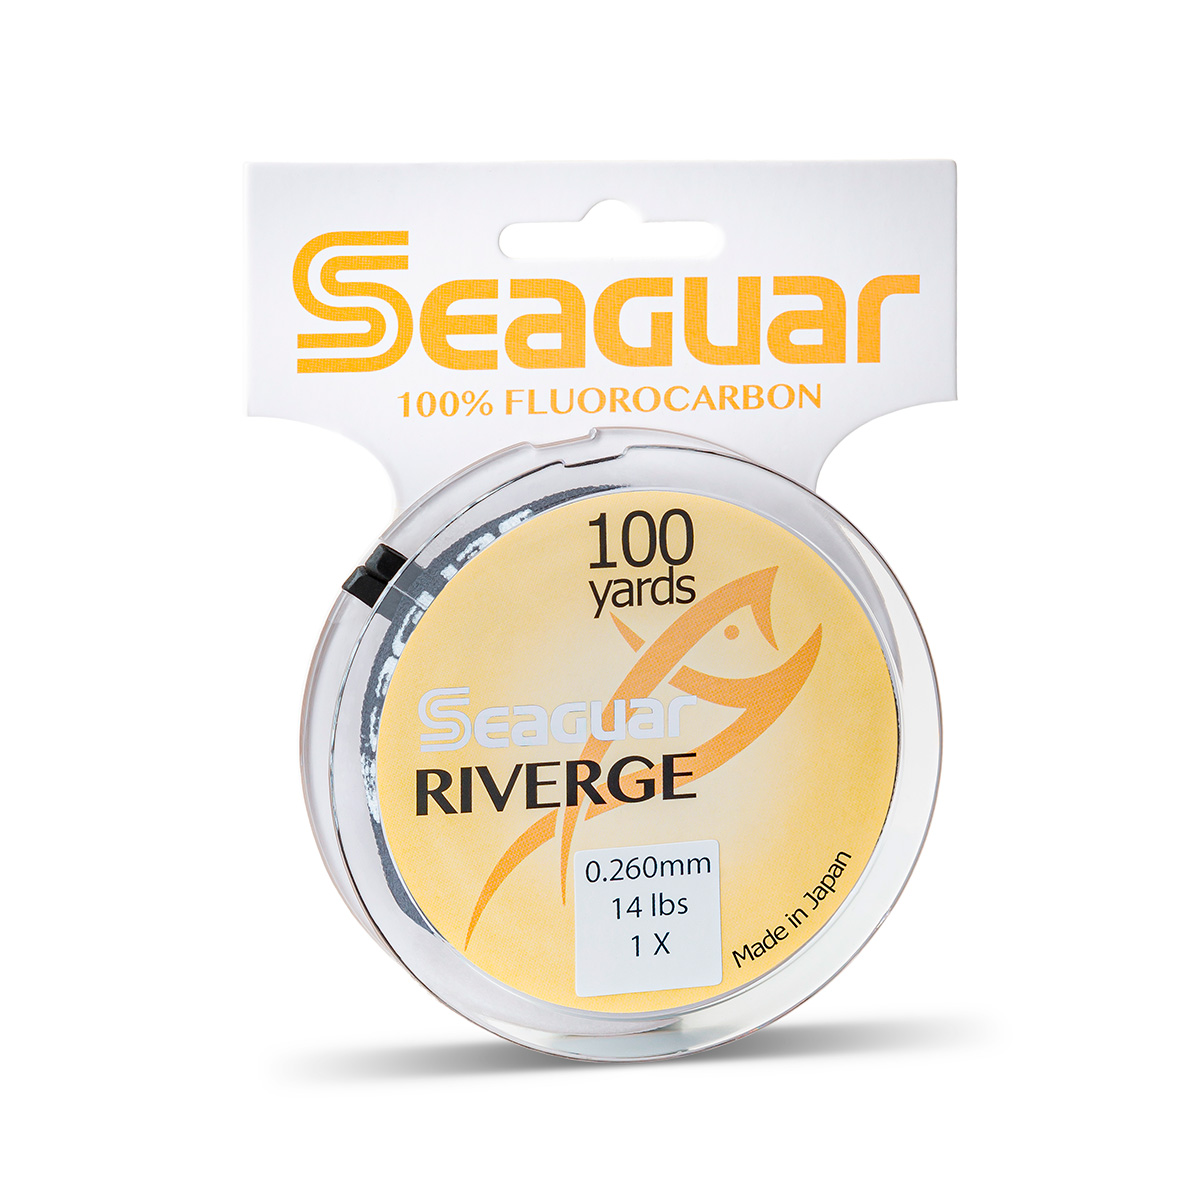 Seaguar Riverge - Seaguar